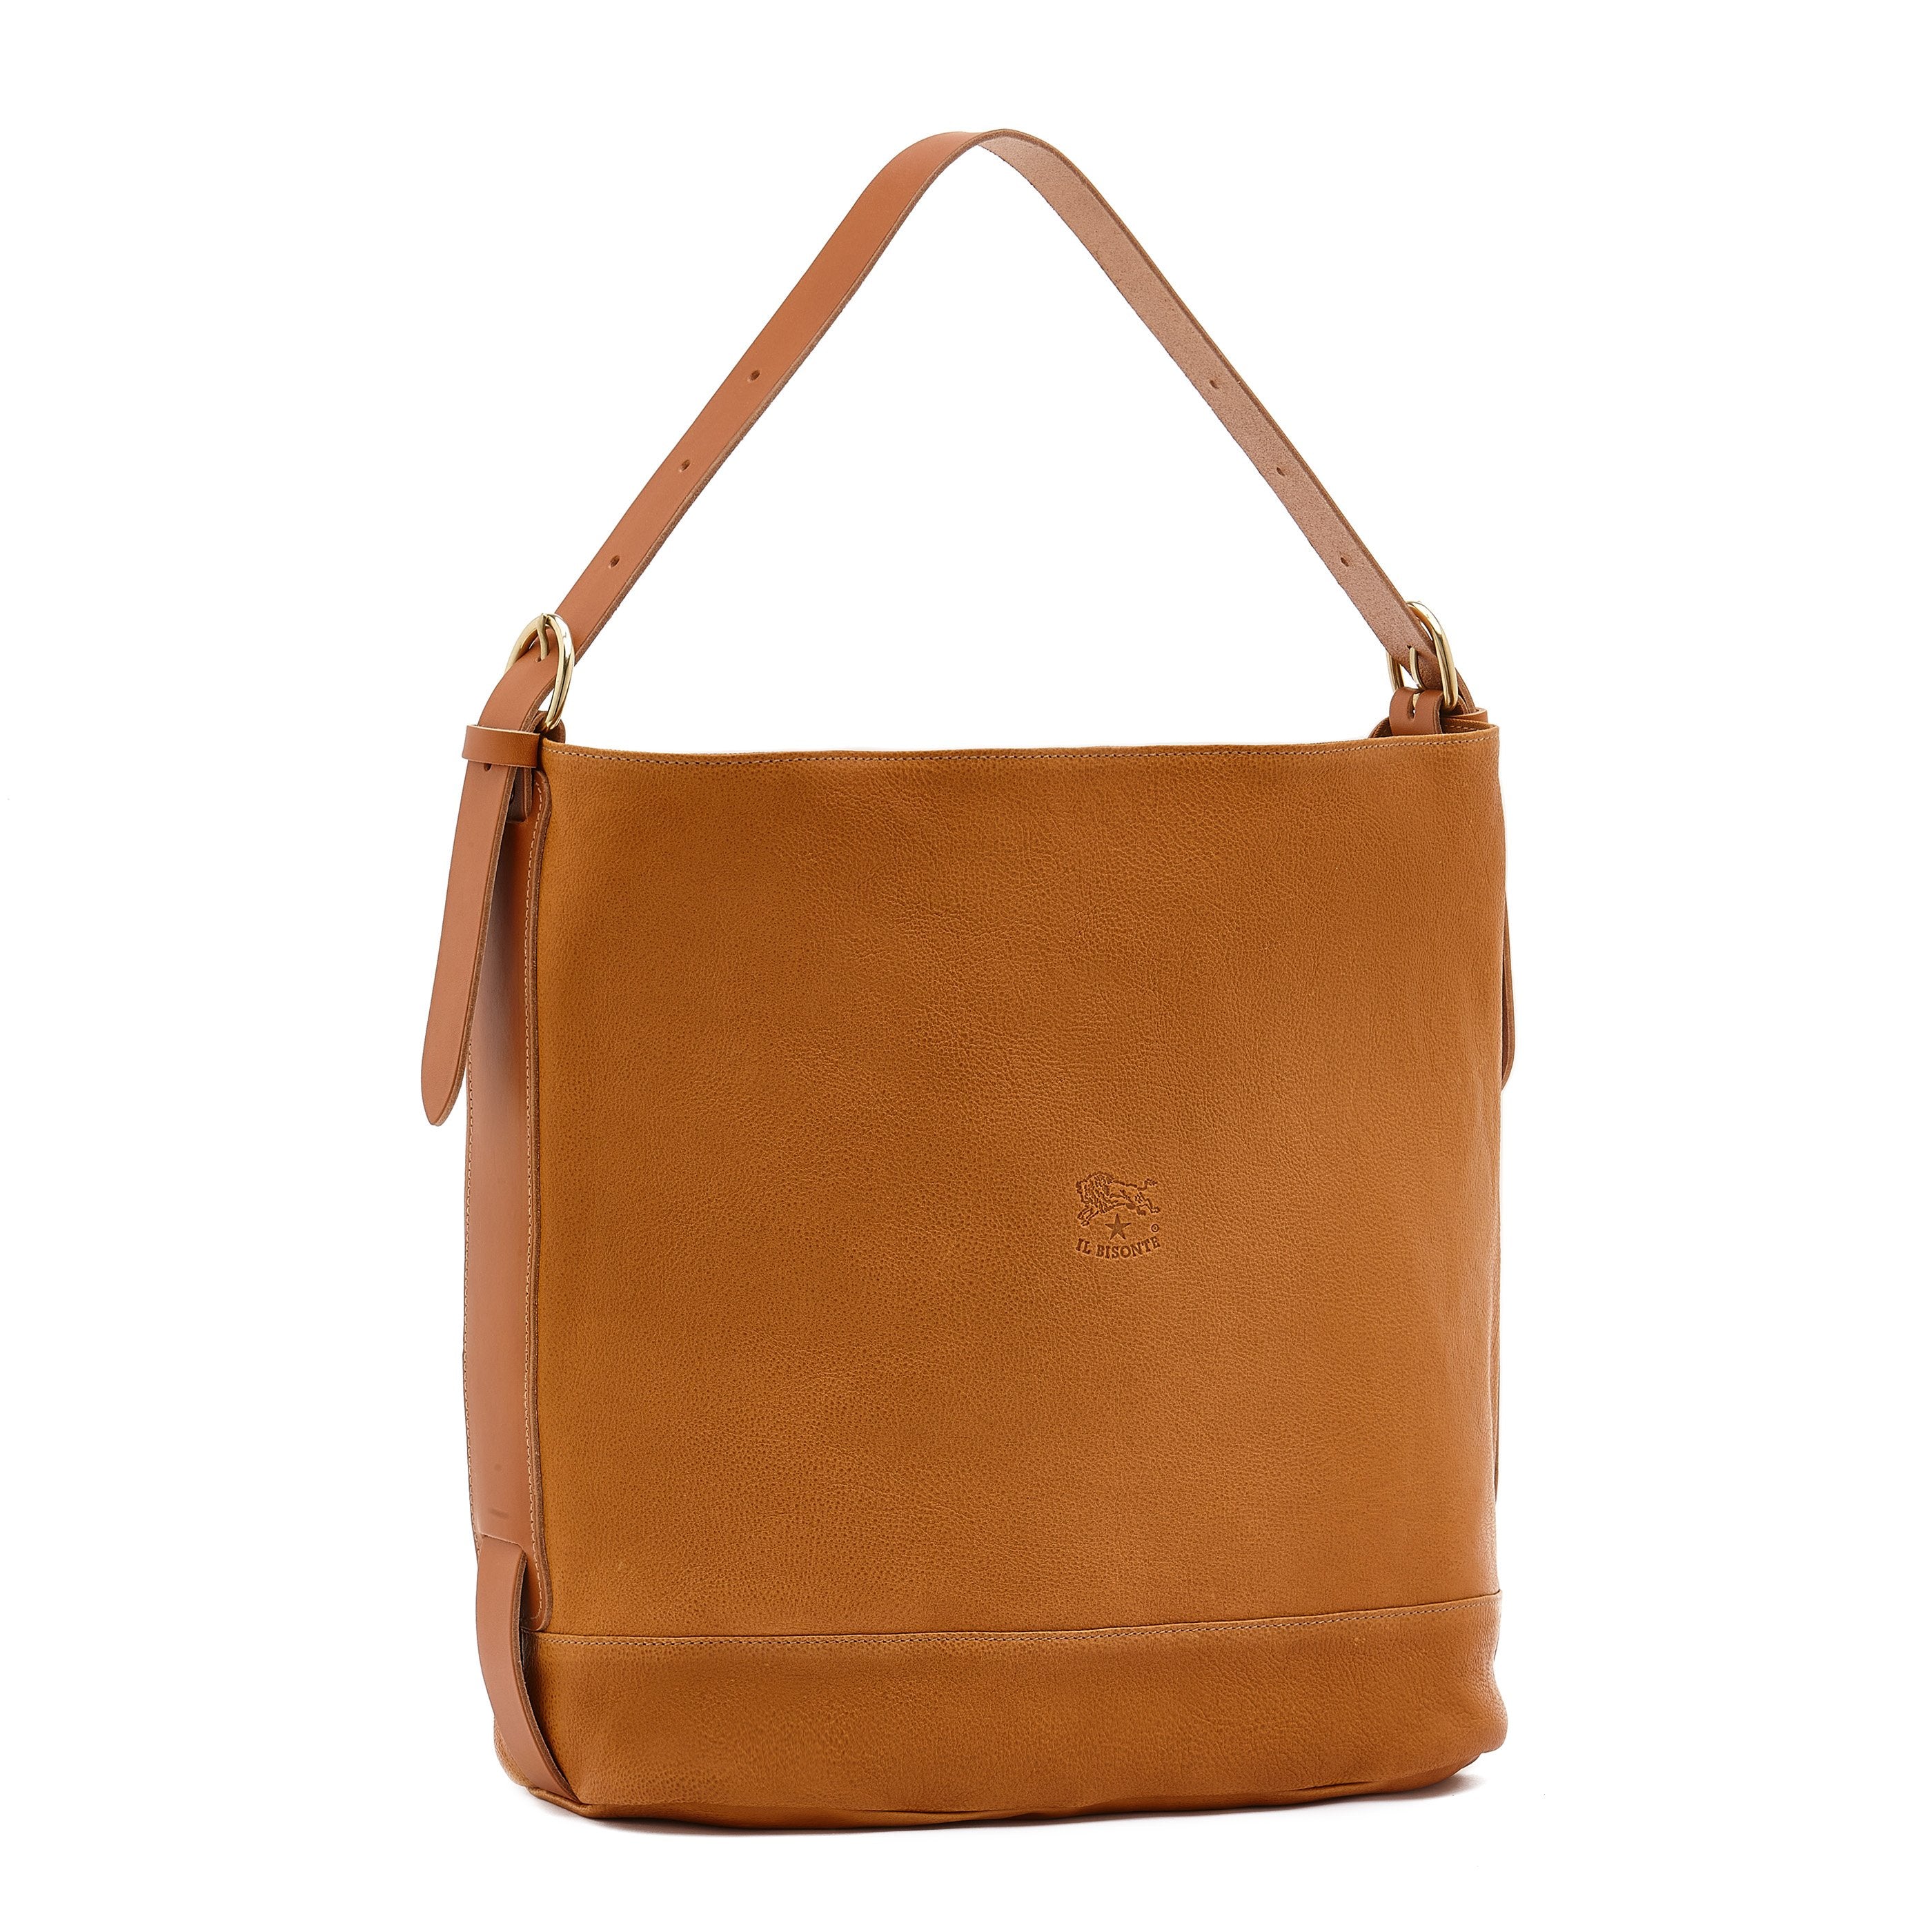 Fausta Medium | Women's crossbody bag in leather color caramel – Il Bisonte